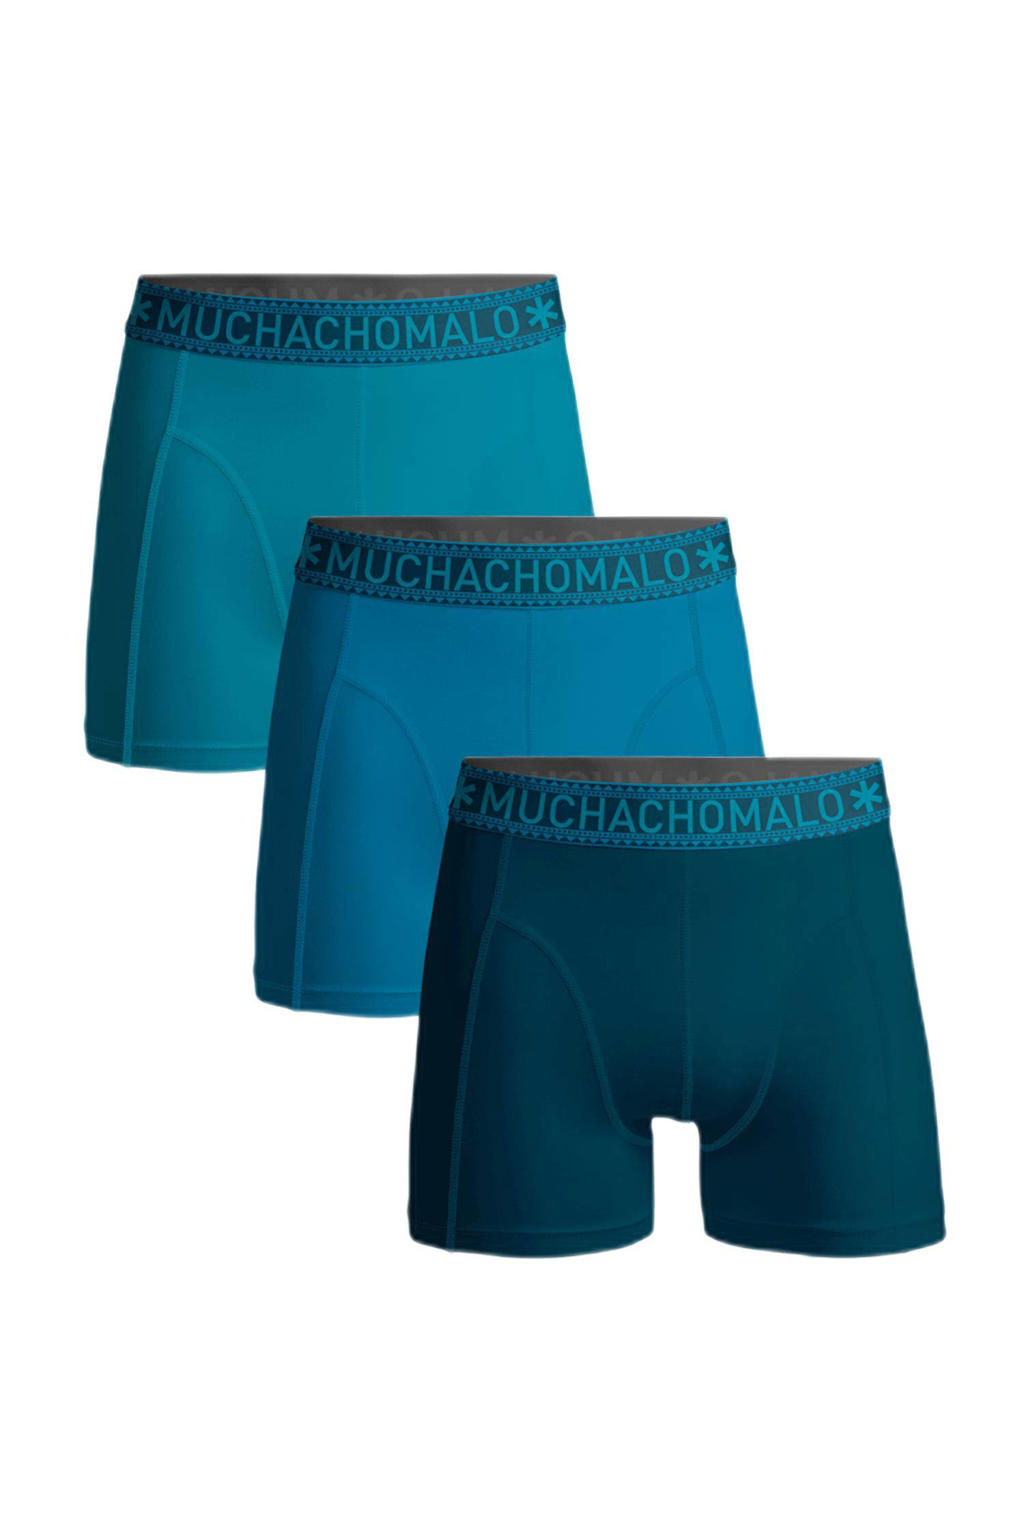 Muchachomalo   boxershort - set van 3 blauw